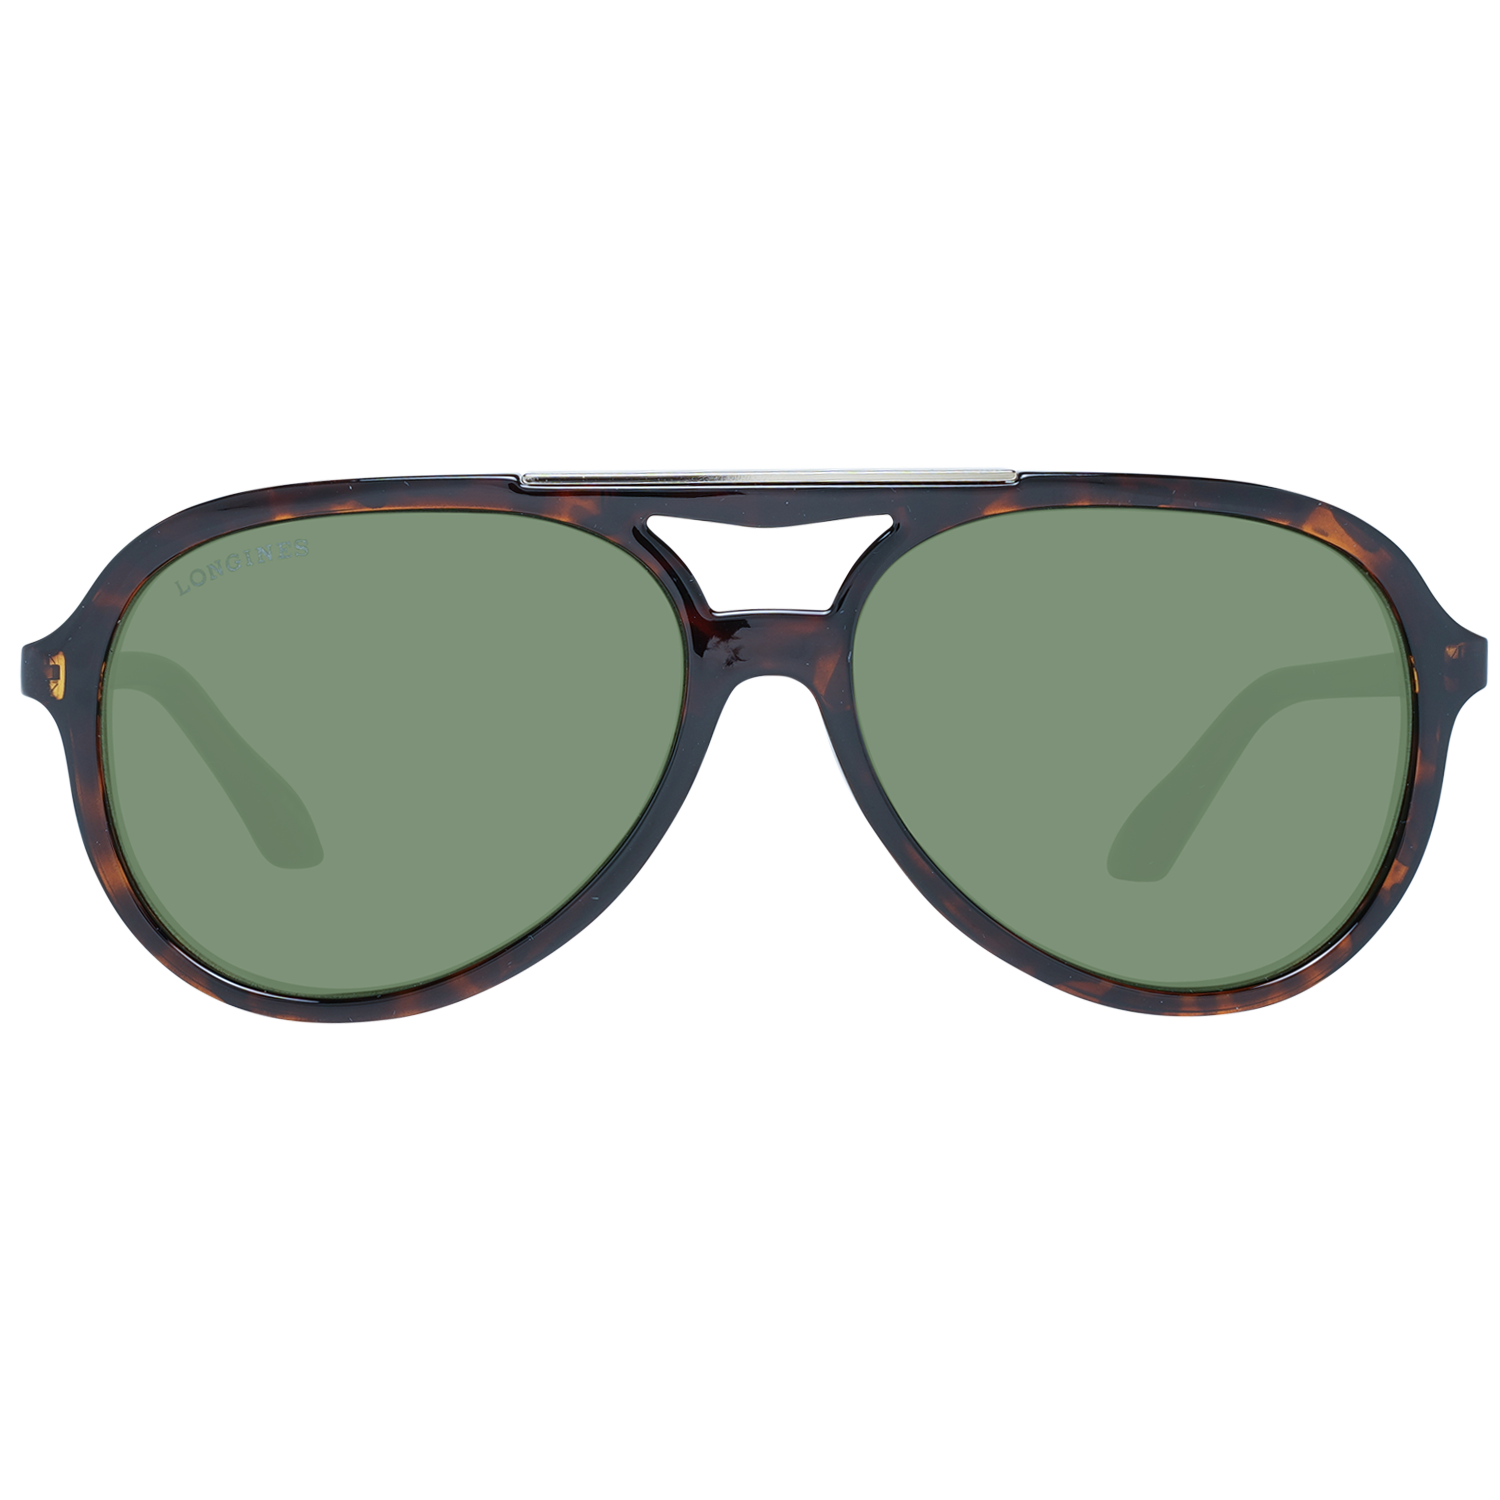 Longines Sunglasses Longines Sunglasses LG0003-H 52N 59mm Eyeglasses Eyewear UK USA Australia 